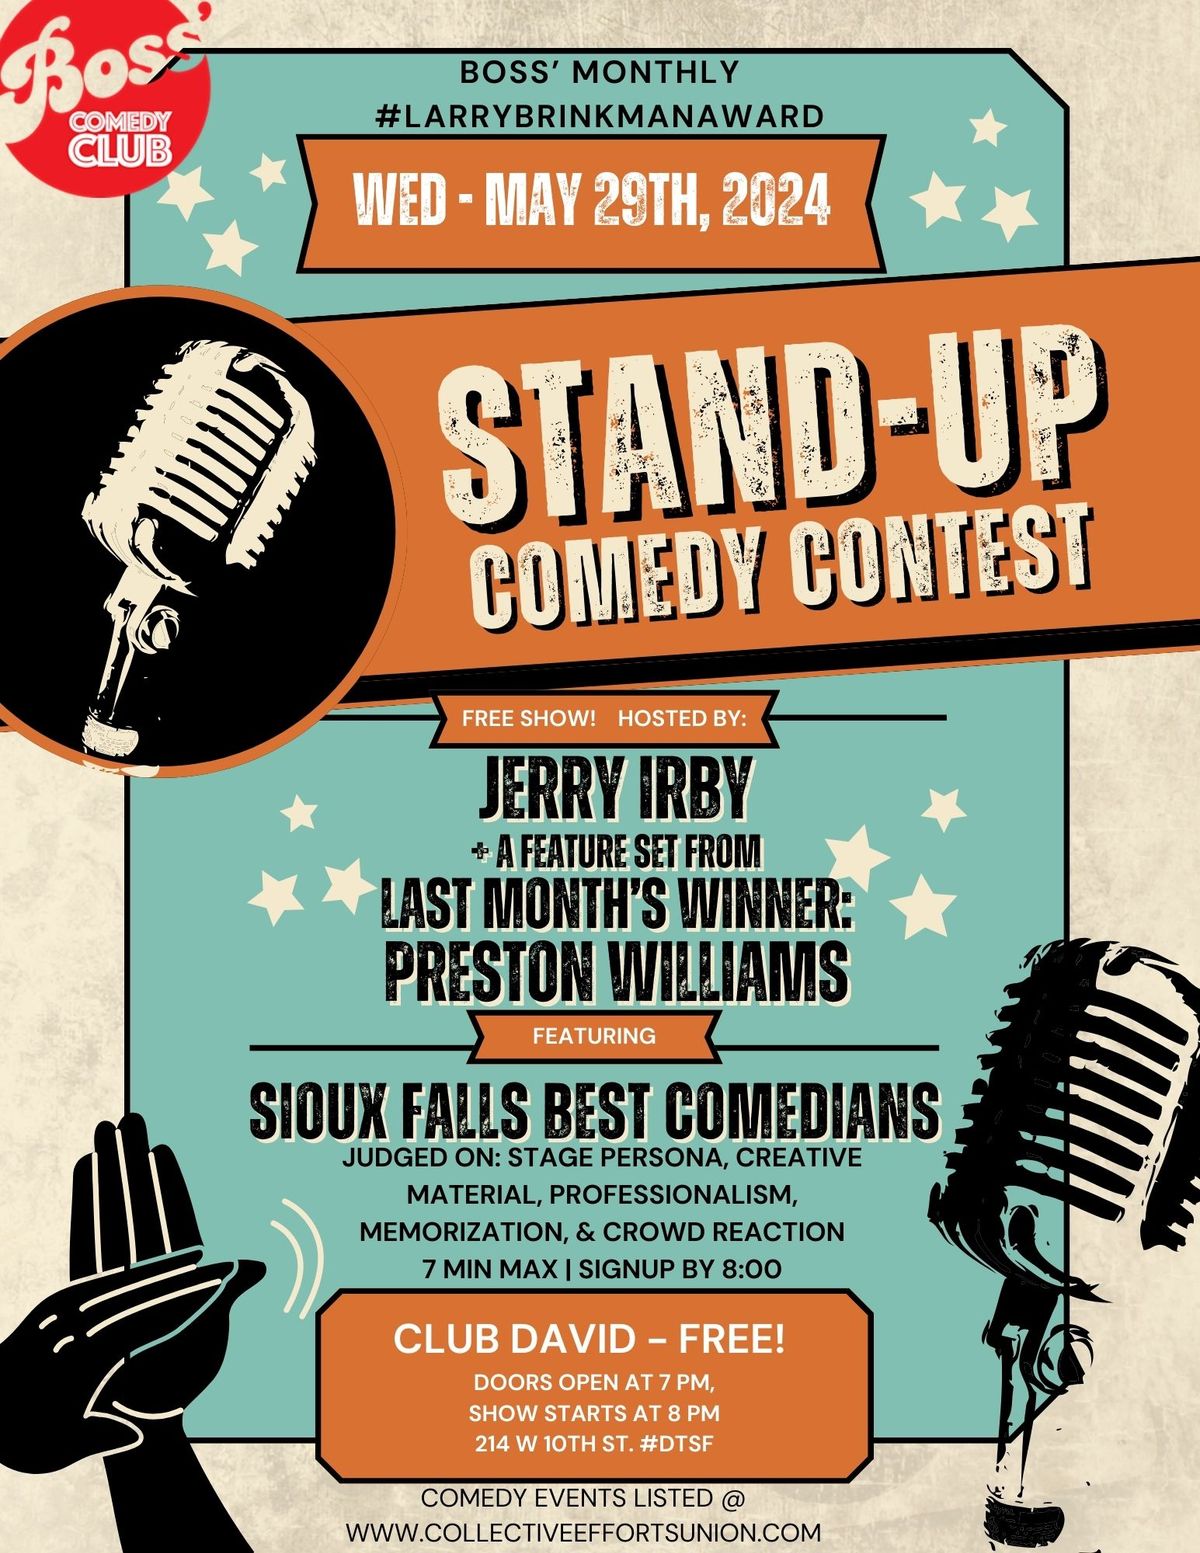 Free Show! Monthly Larry Brinkman Award Comedy Contest @ Club David